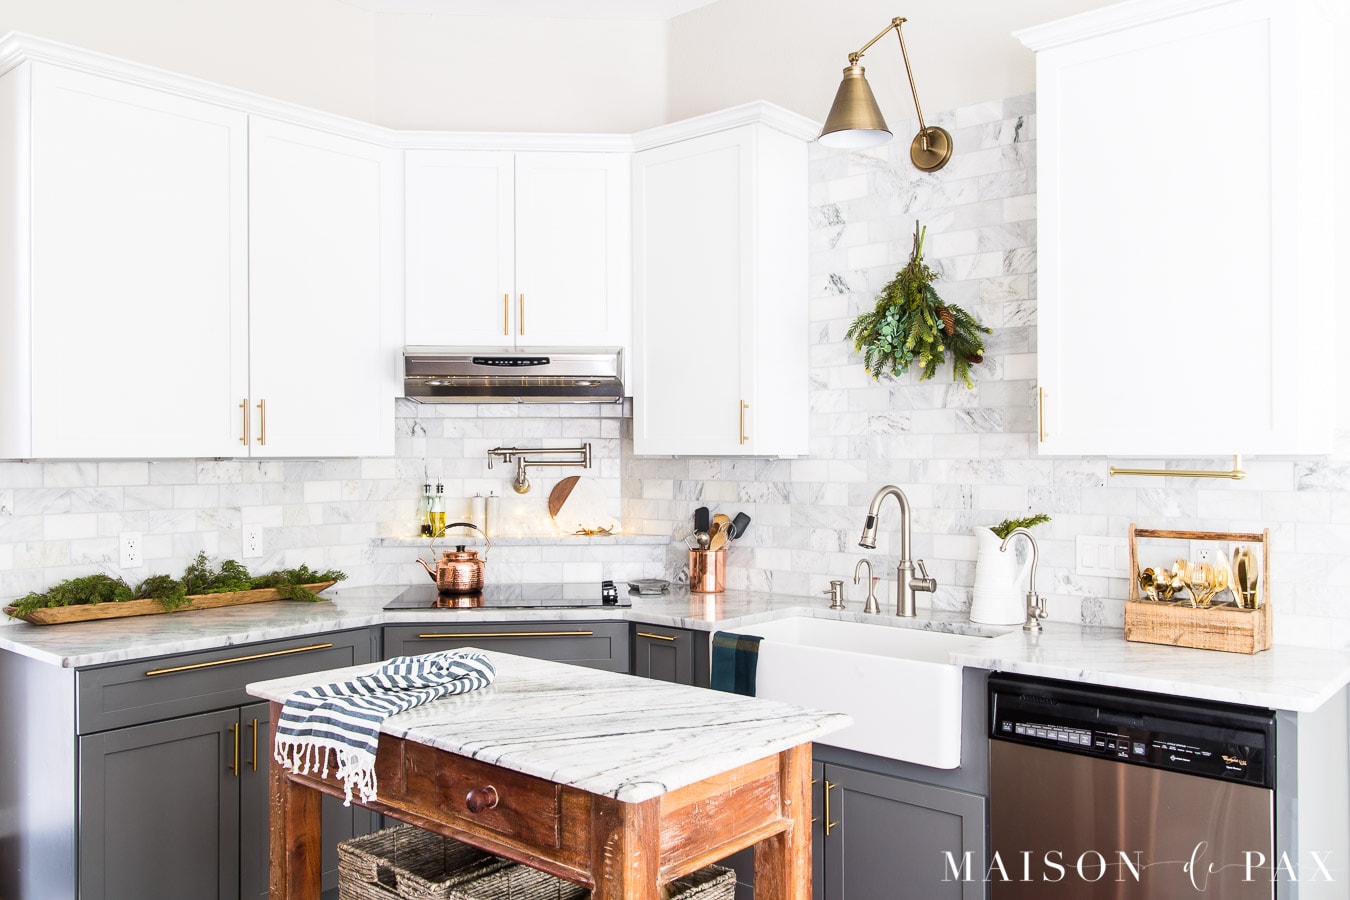 Christmas Kitchen Decor: Natural, Fresh, Simple - Maison ...
